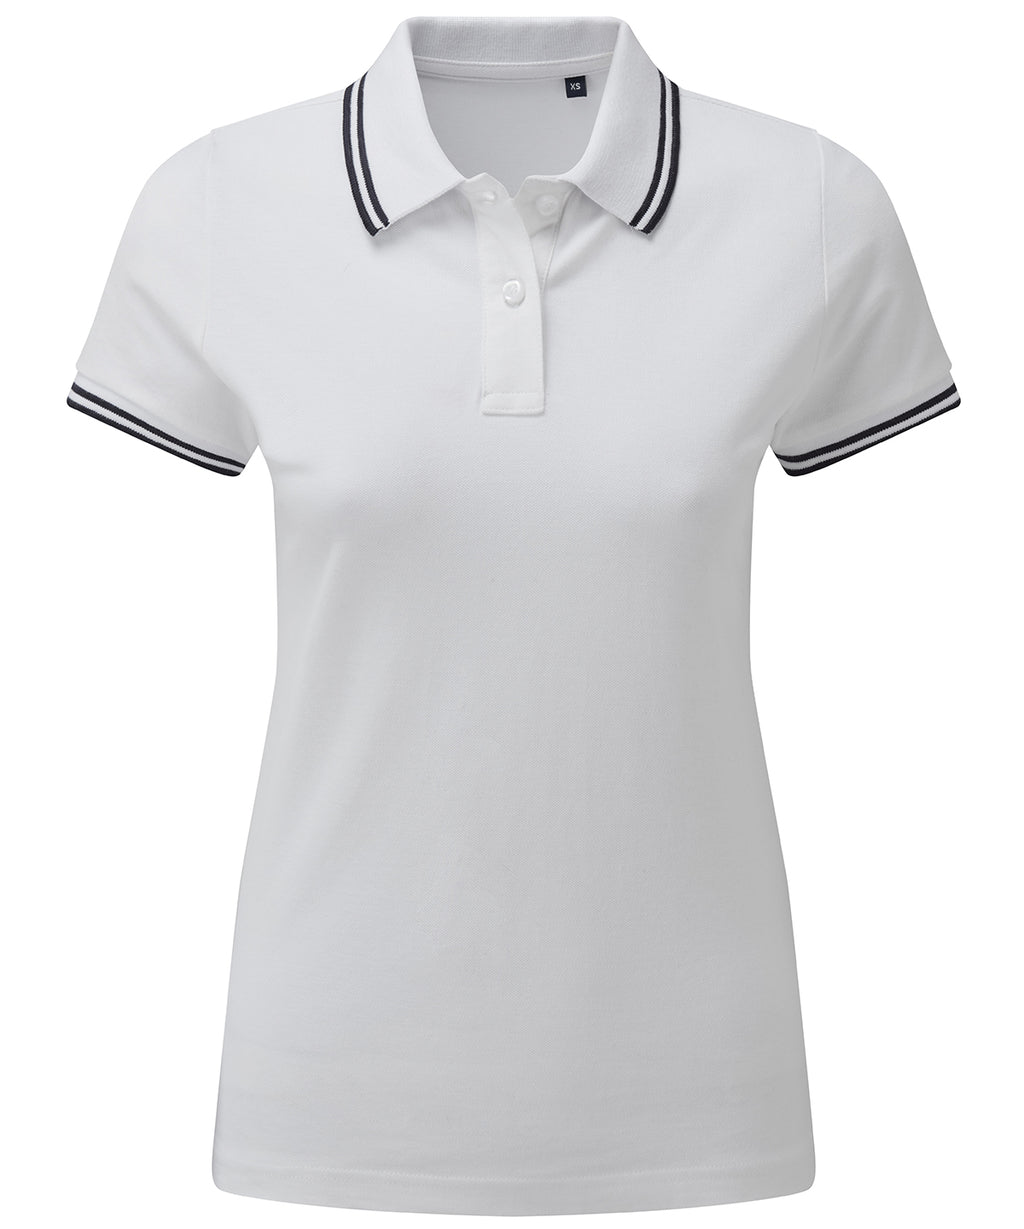 Womens Tipped Polo Shirt - White/Navy